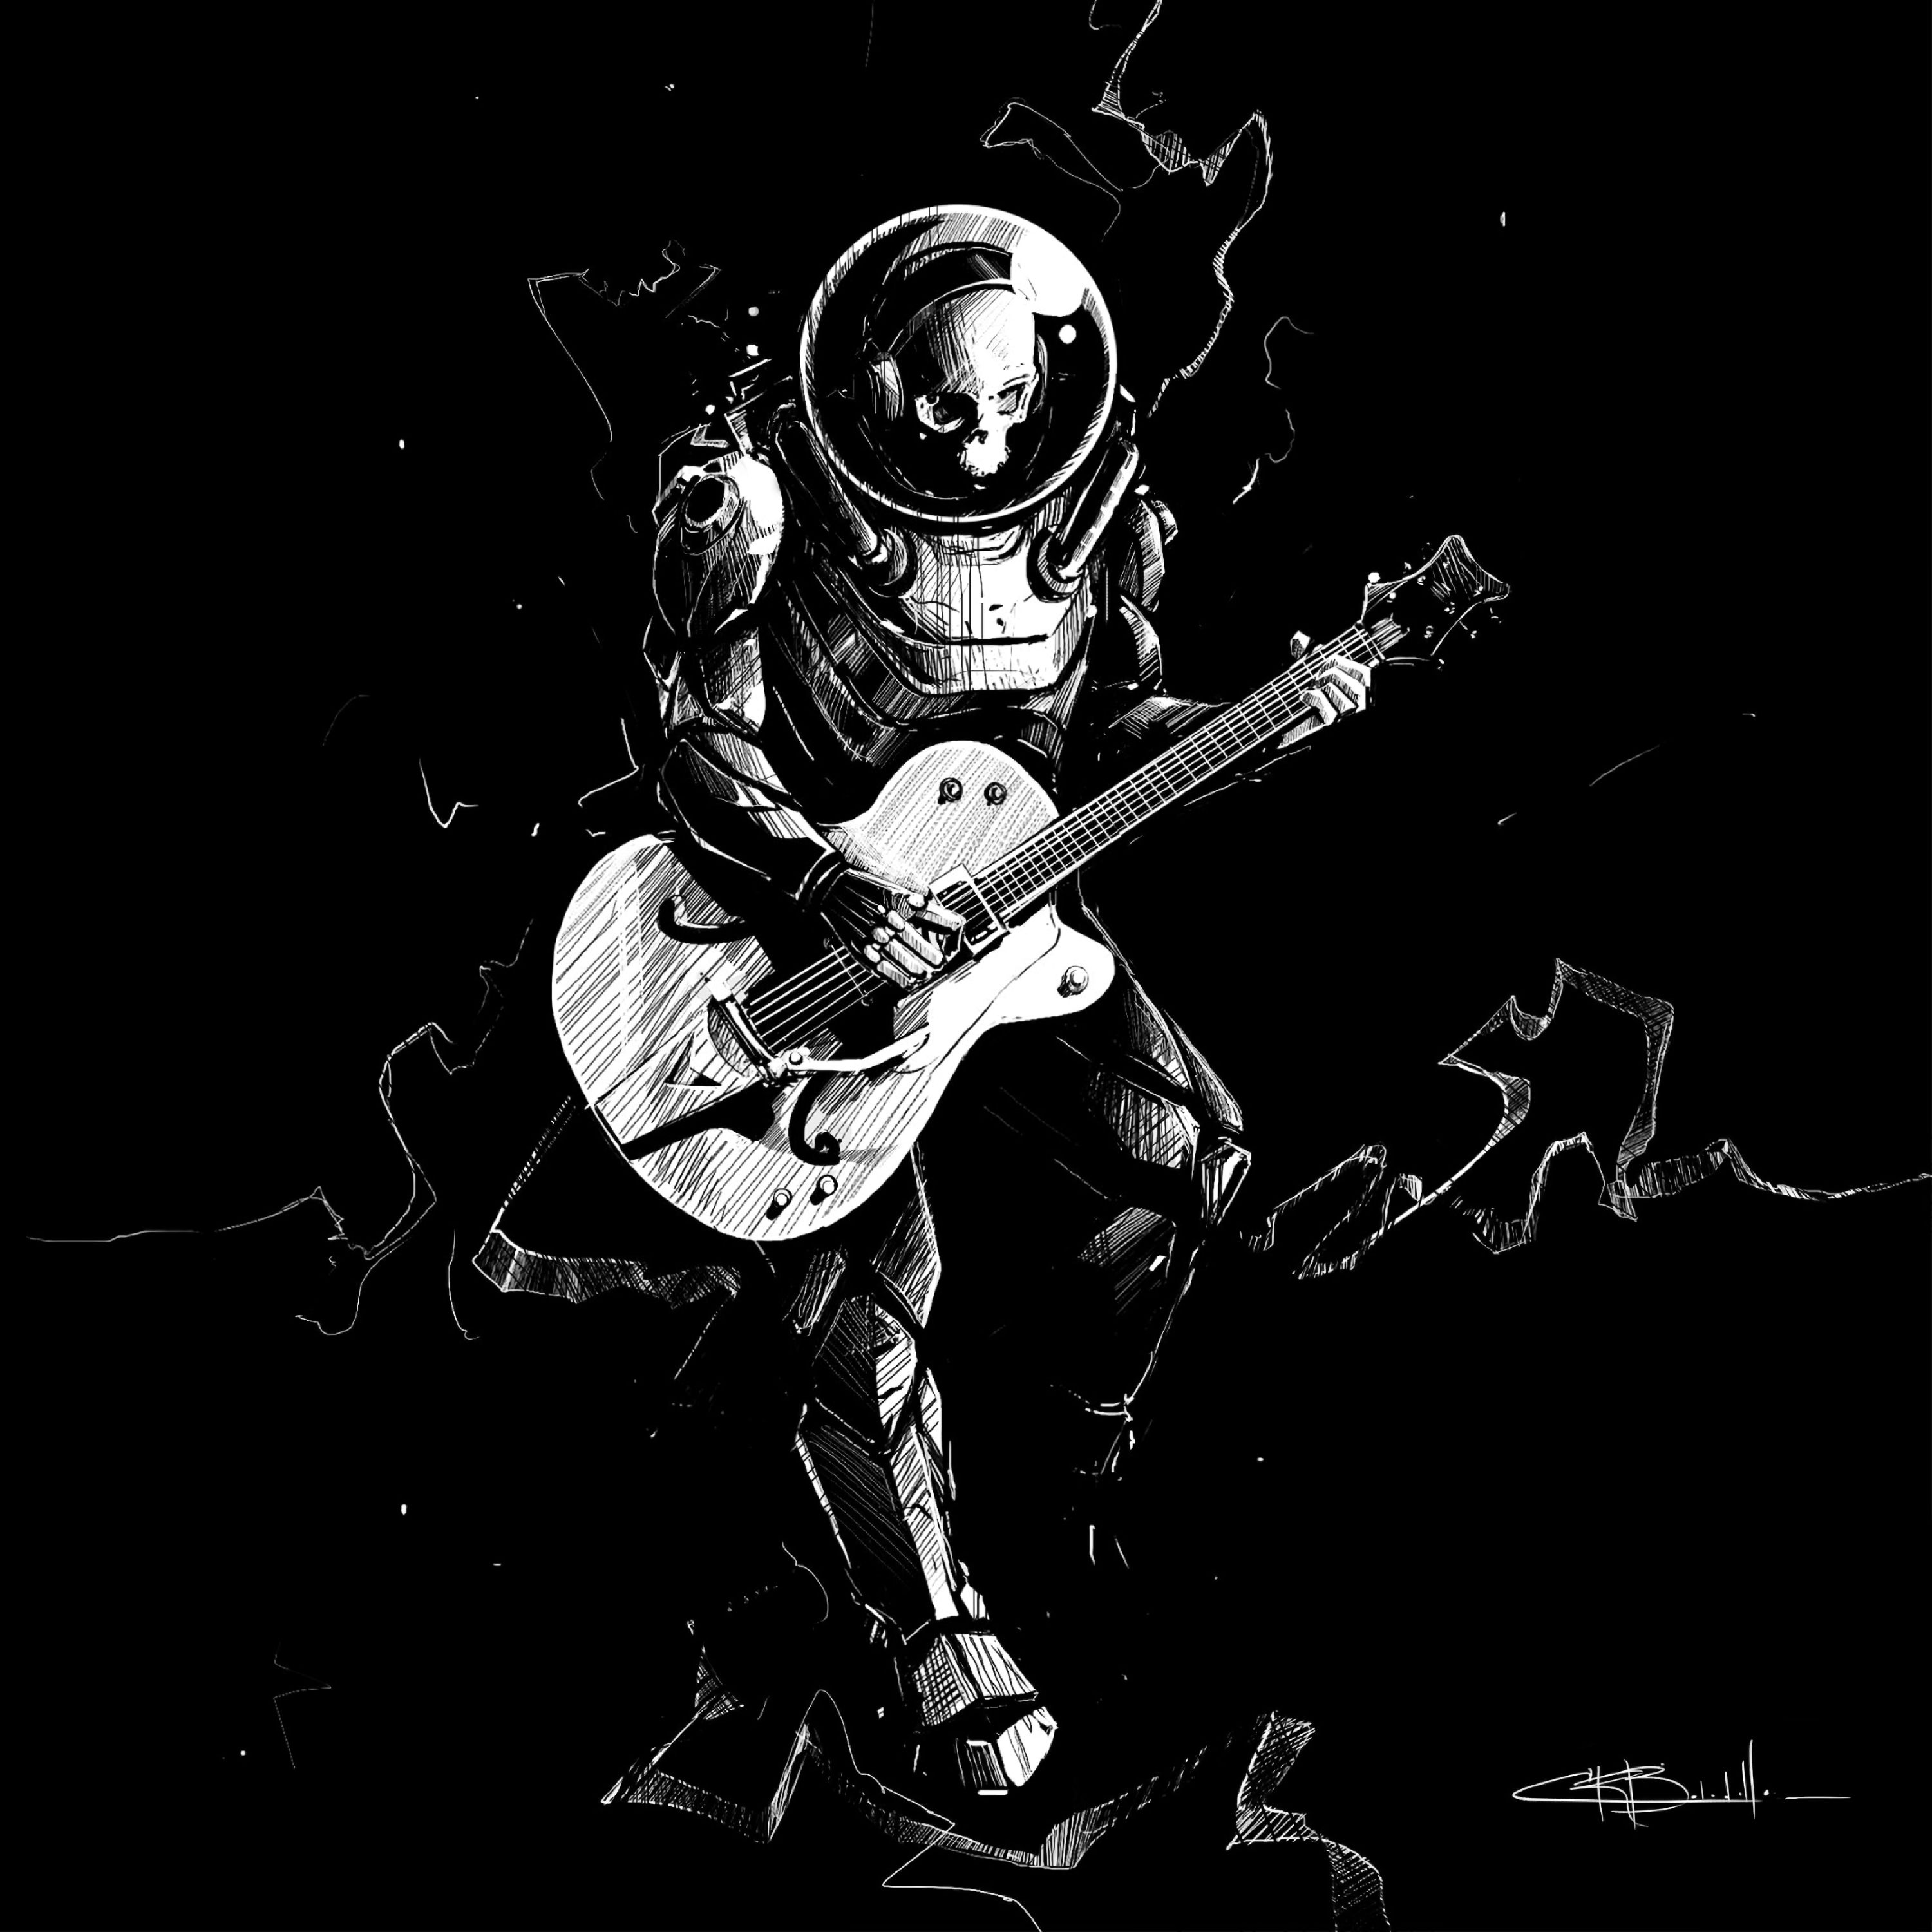 guitar player, skeleton, guitar, art, bw, chb, guitarist, spacesuit, space suit